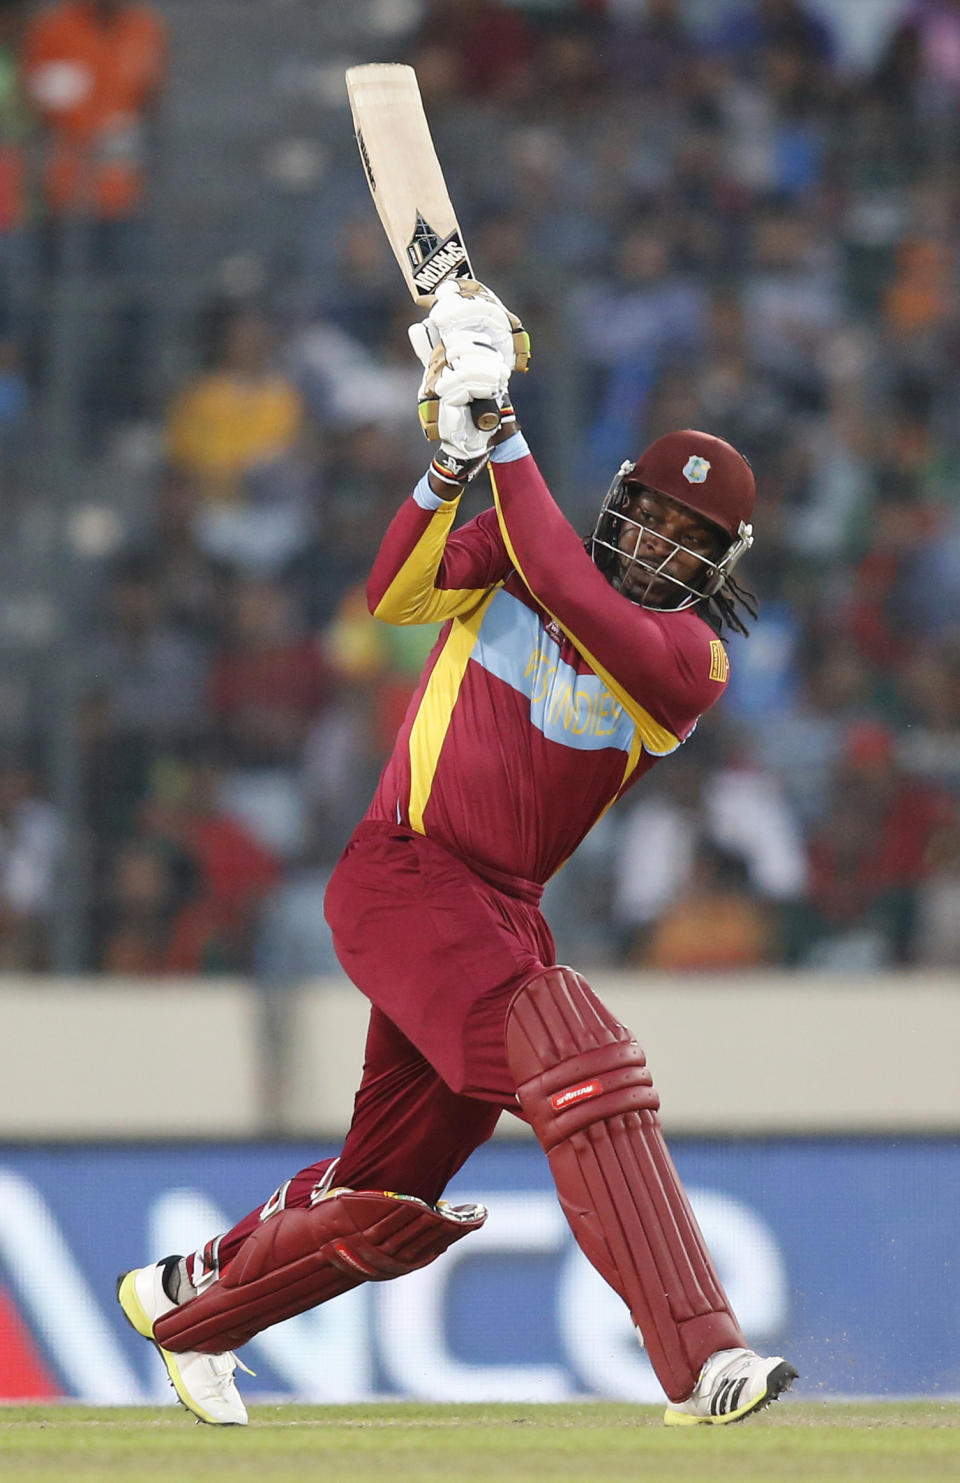 West Indies' batsman Chris Gayle watches his shot during the ICC Twenty20 Cricket World Cup match against Australia in Dhaka, Bangladesh, Friday, March 28, 2014. (AP Photo/Aijaz Rahi)